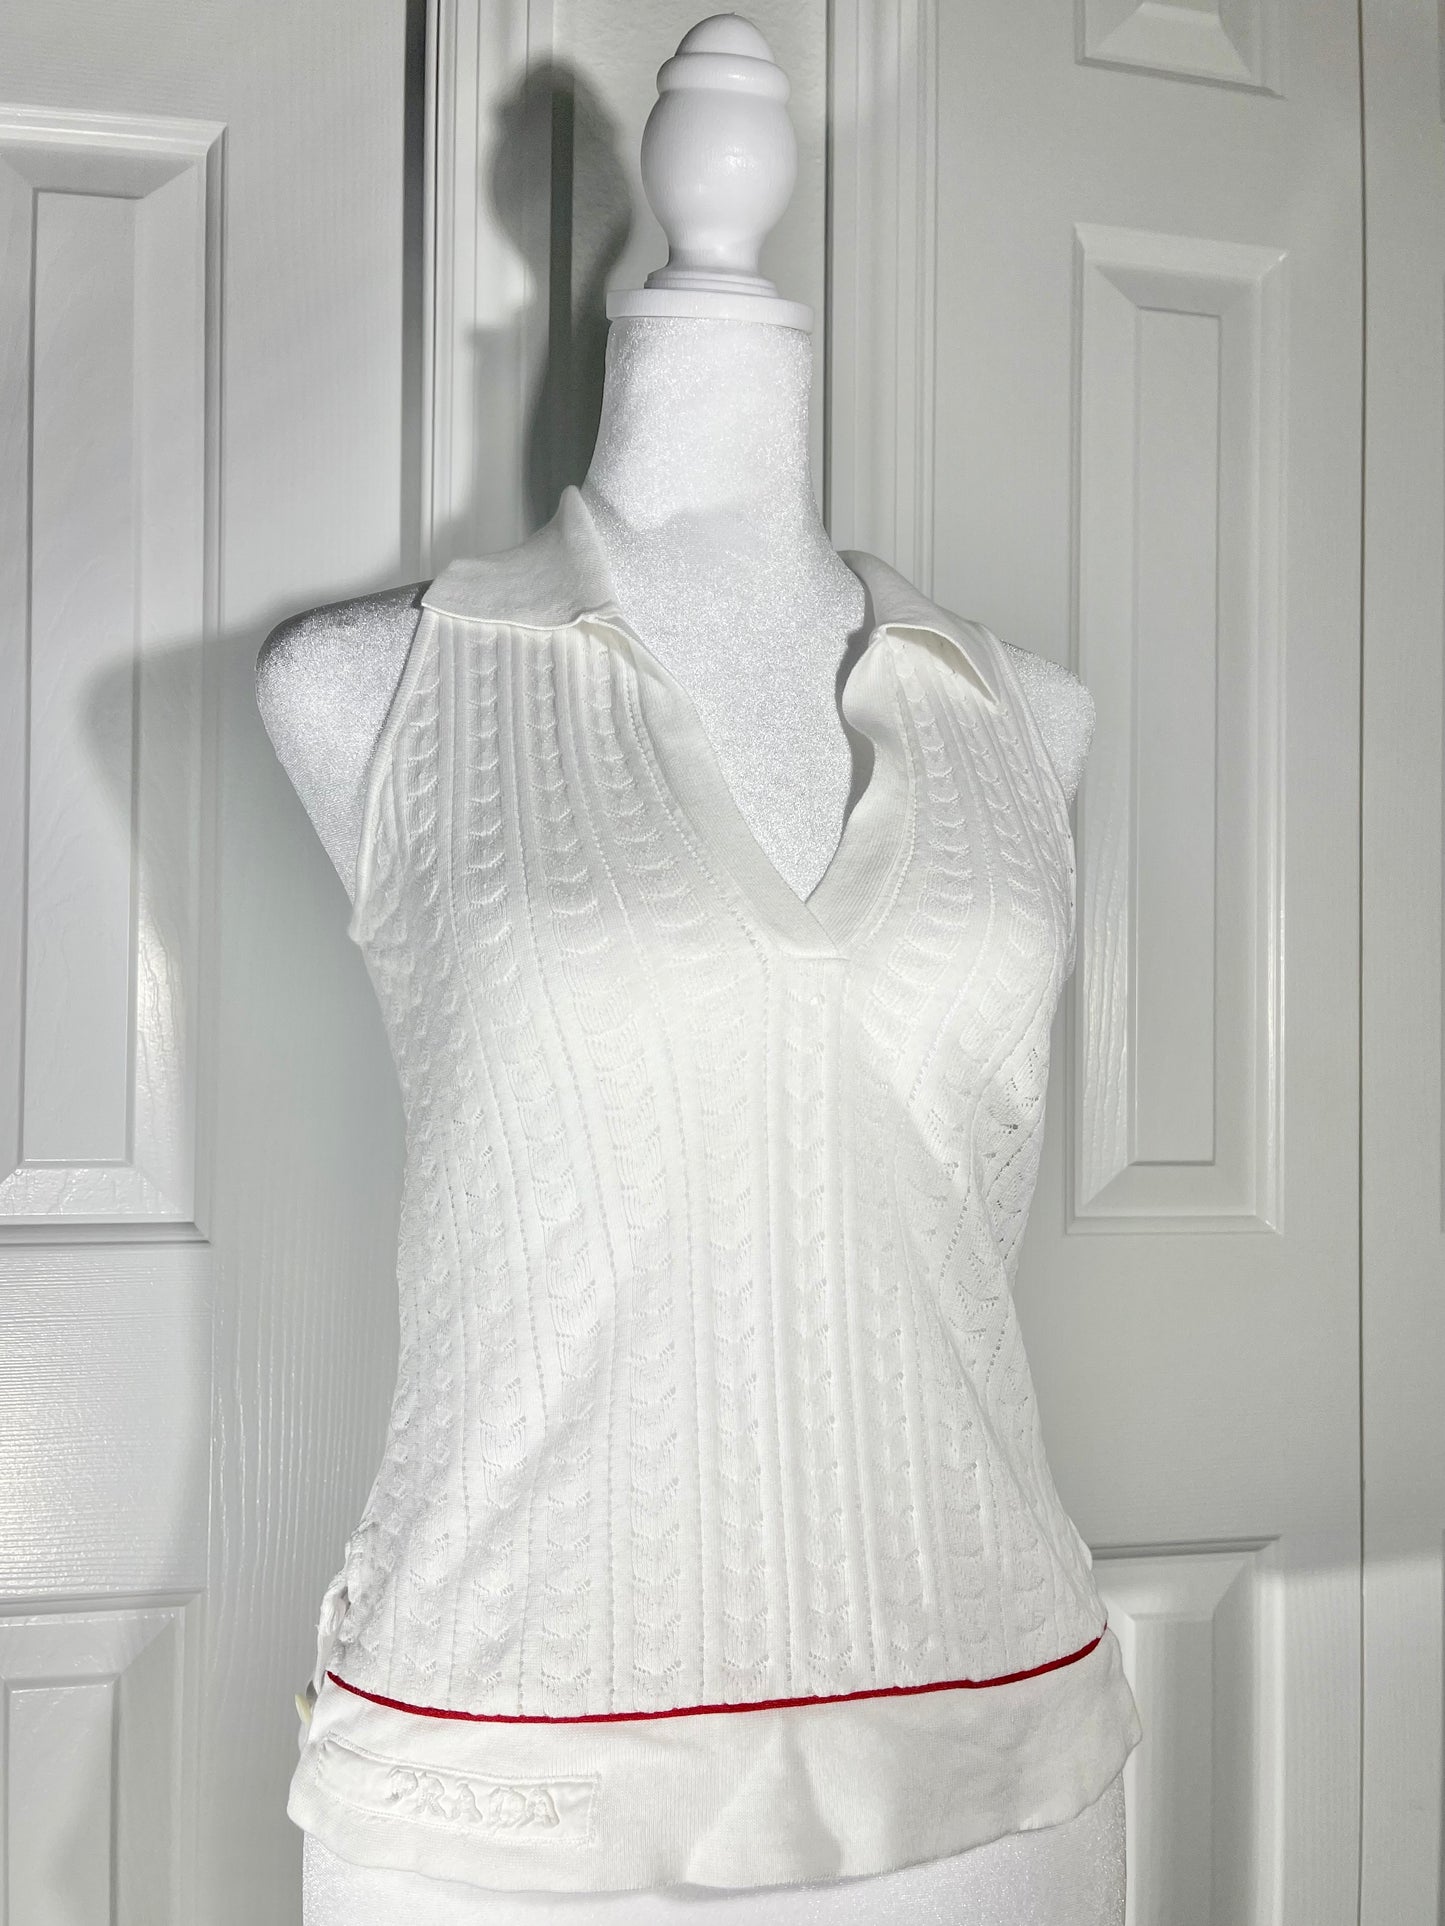 Prada Vintage White w Red Stripe Crochet Collared Tank Top - Size 38